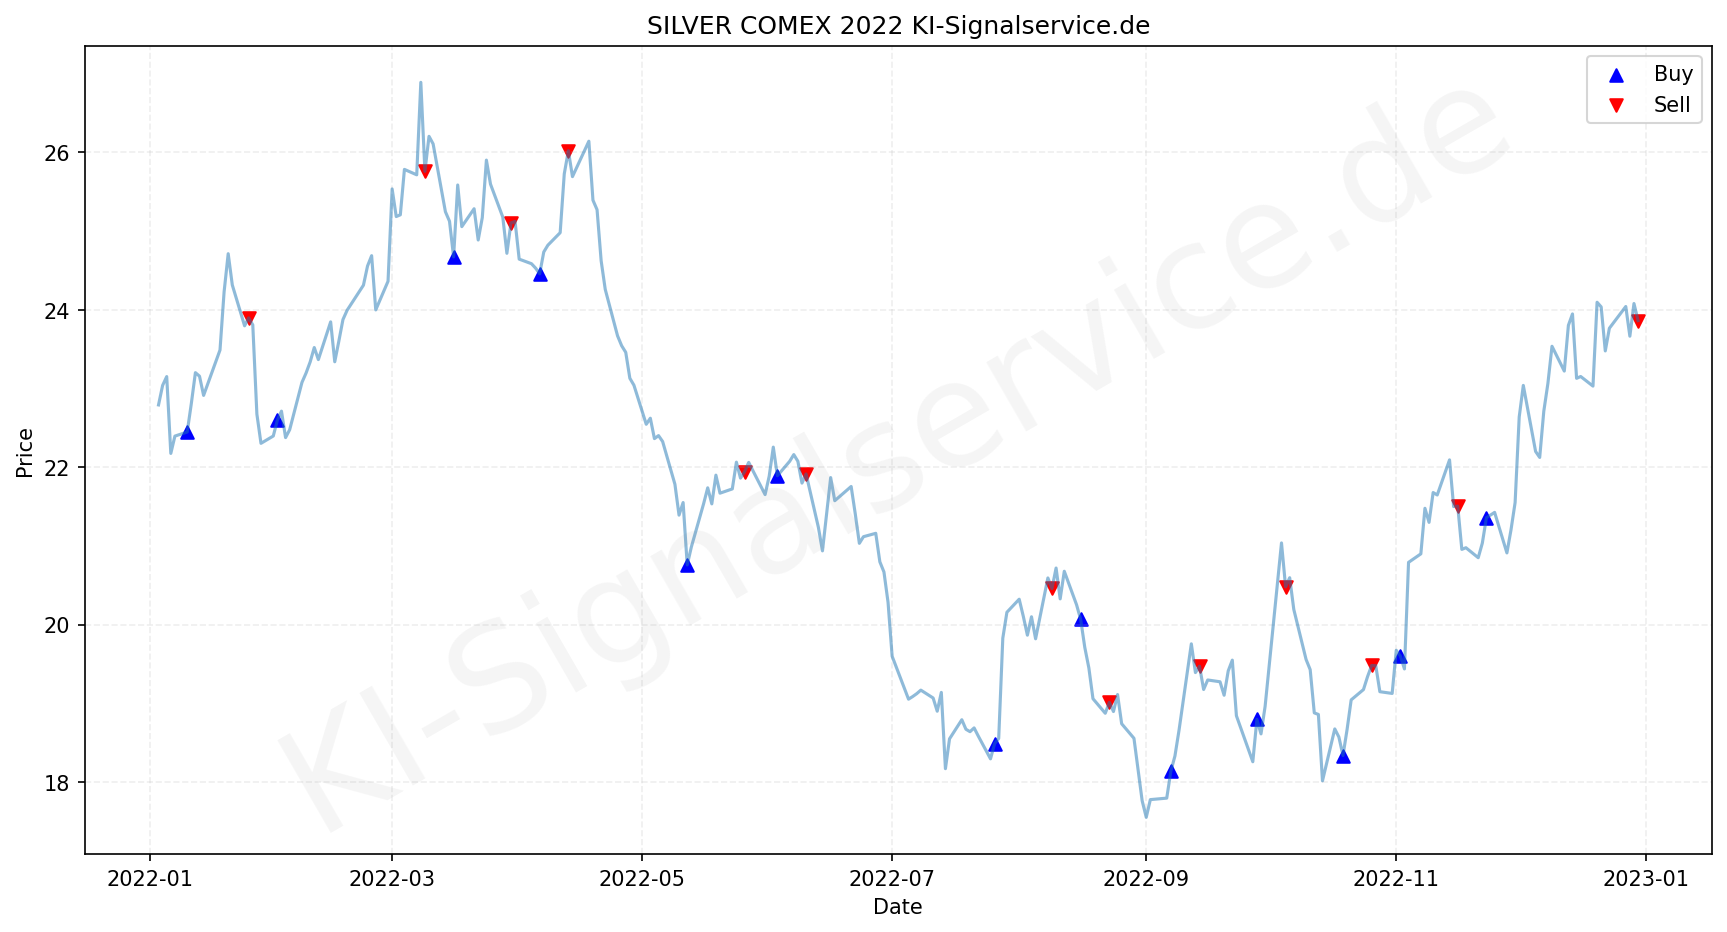 Silver Chart - KI Tradingsignale 2022